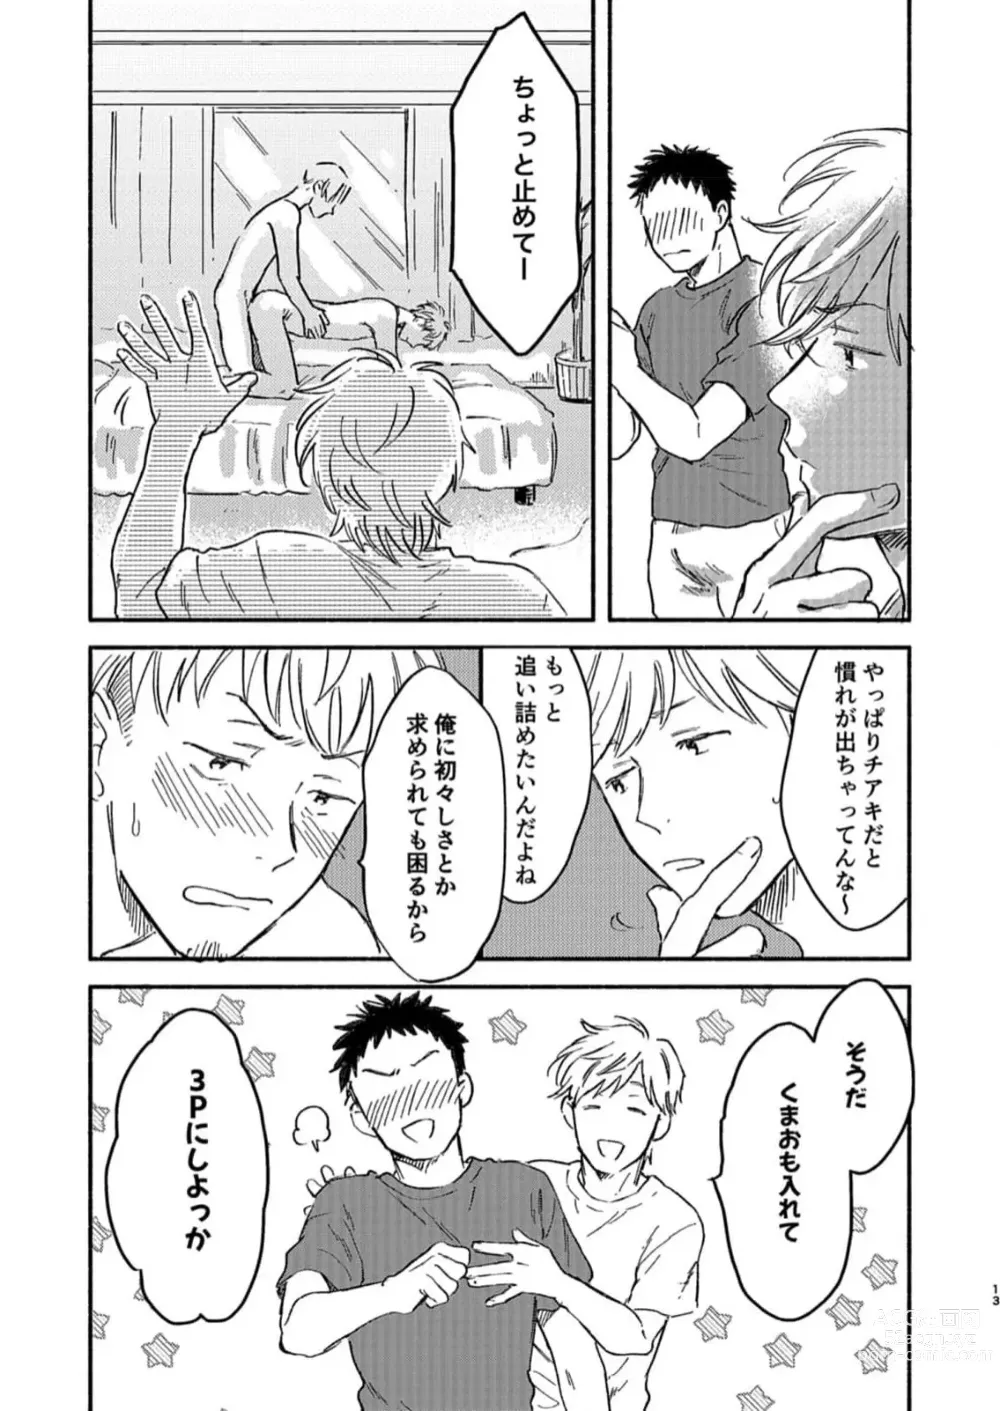 Page 13 of doujinshi Toaru GayVi Seisaku Gaisha Staff no Shanai Renai Jijou - The internal love affairs of the staff of a certain gay video production company.